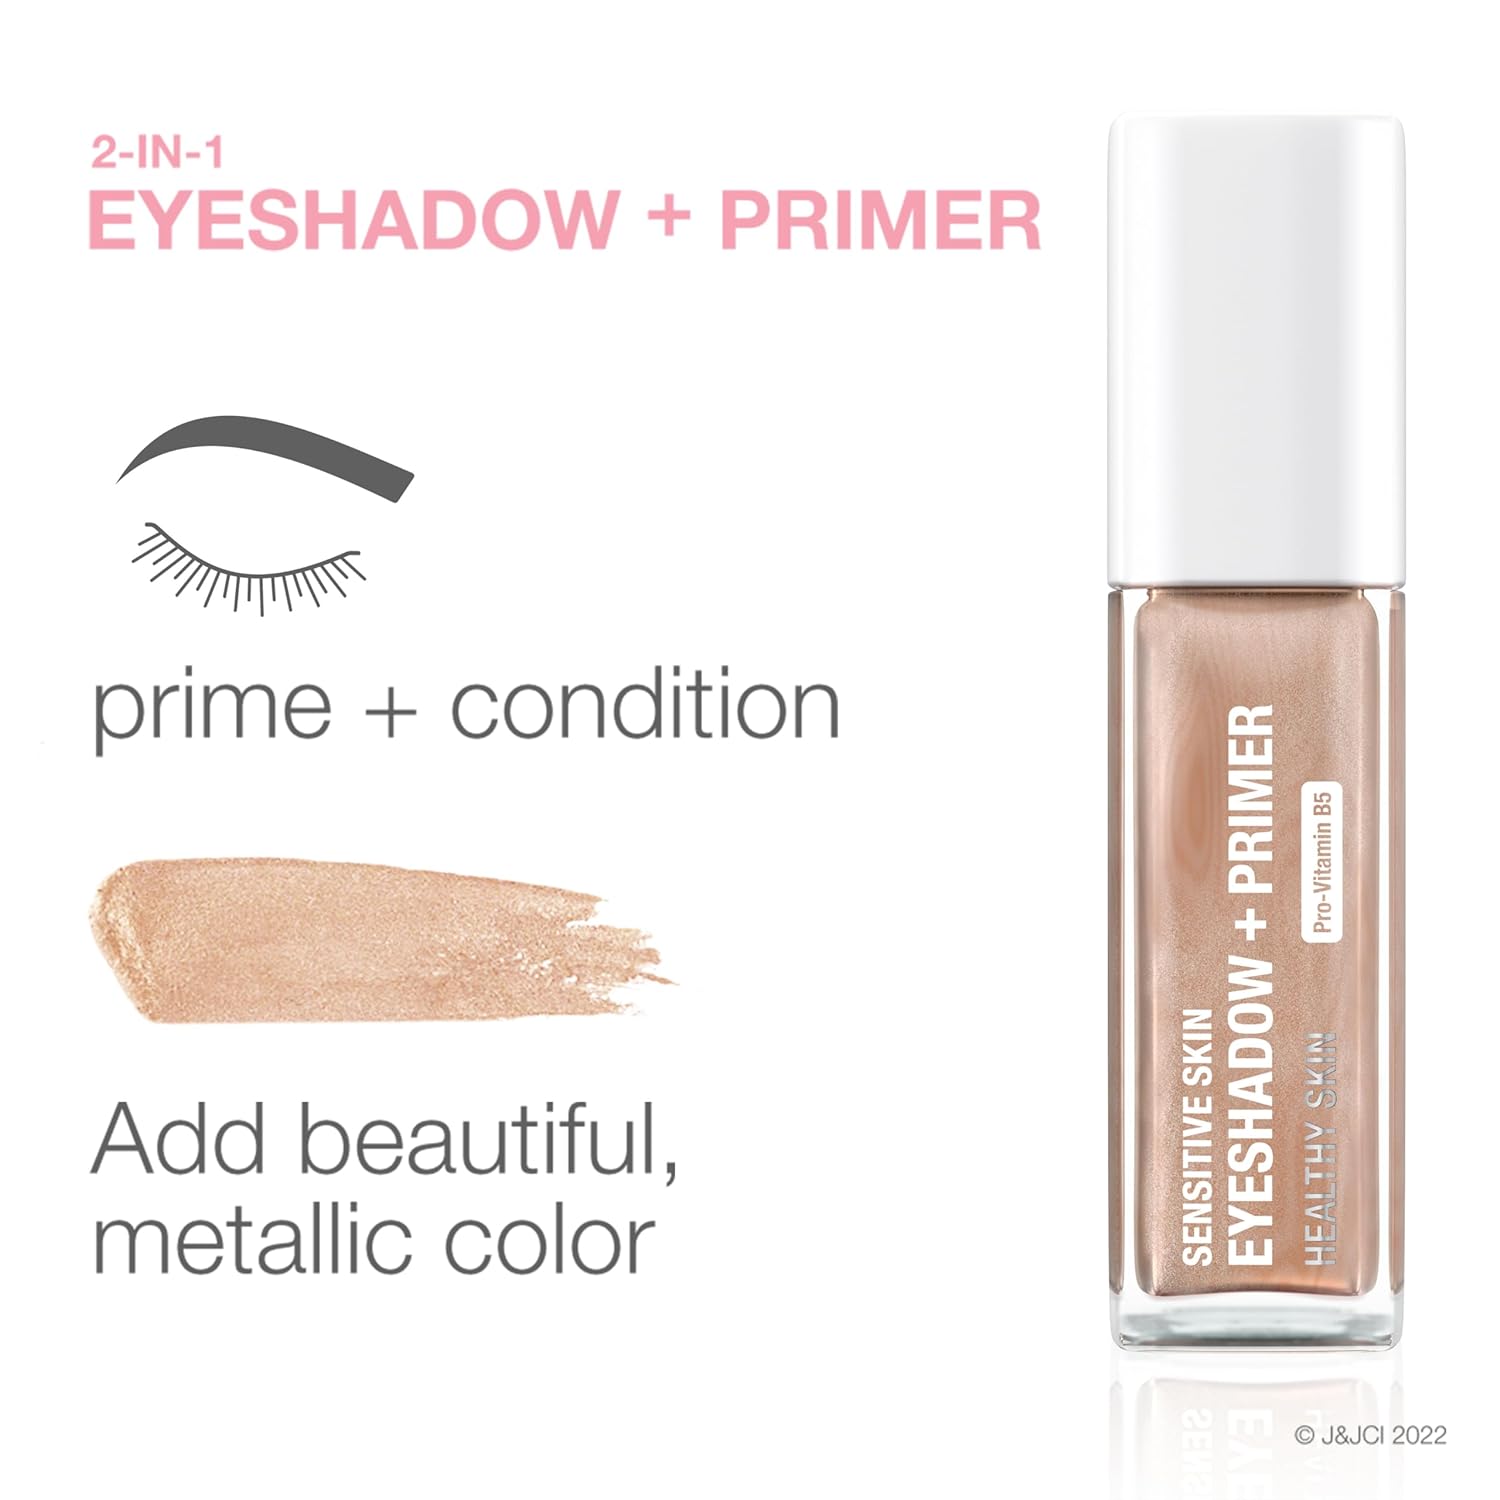 Neutrogena Sensitive Skin Eyeshadow + Primer, a Longwearing, 2-in-1 Metallic Eyeshadow for Sensitive Skin with Pro-Vitamin B5, Lightweight Cream-to-Powder Formula, Soft Pearl, 0.22 oz : Beauty & Personal Care